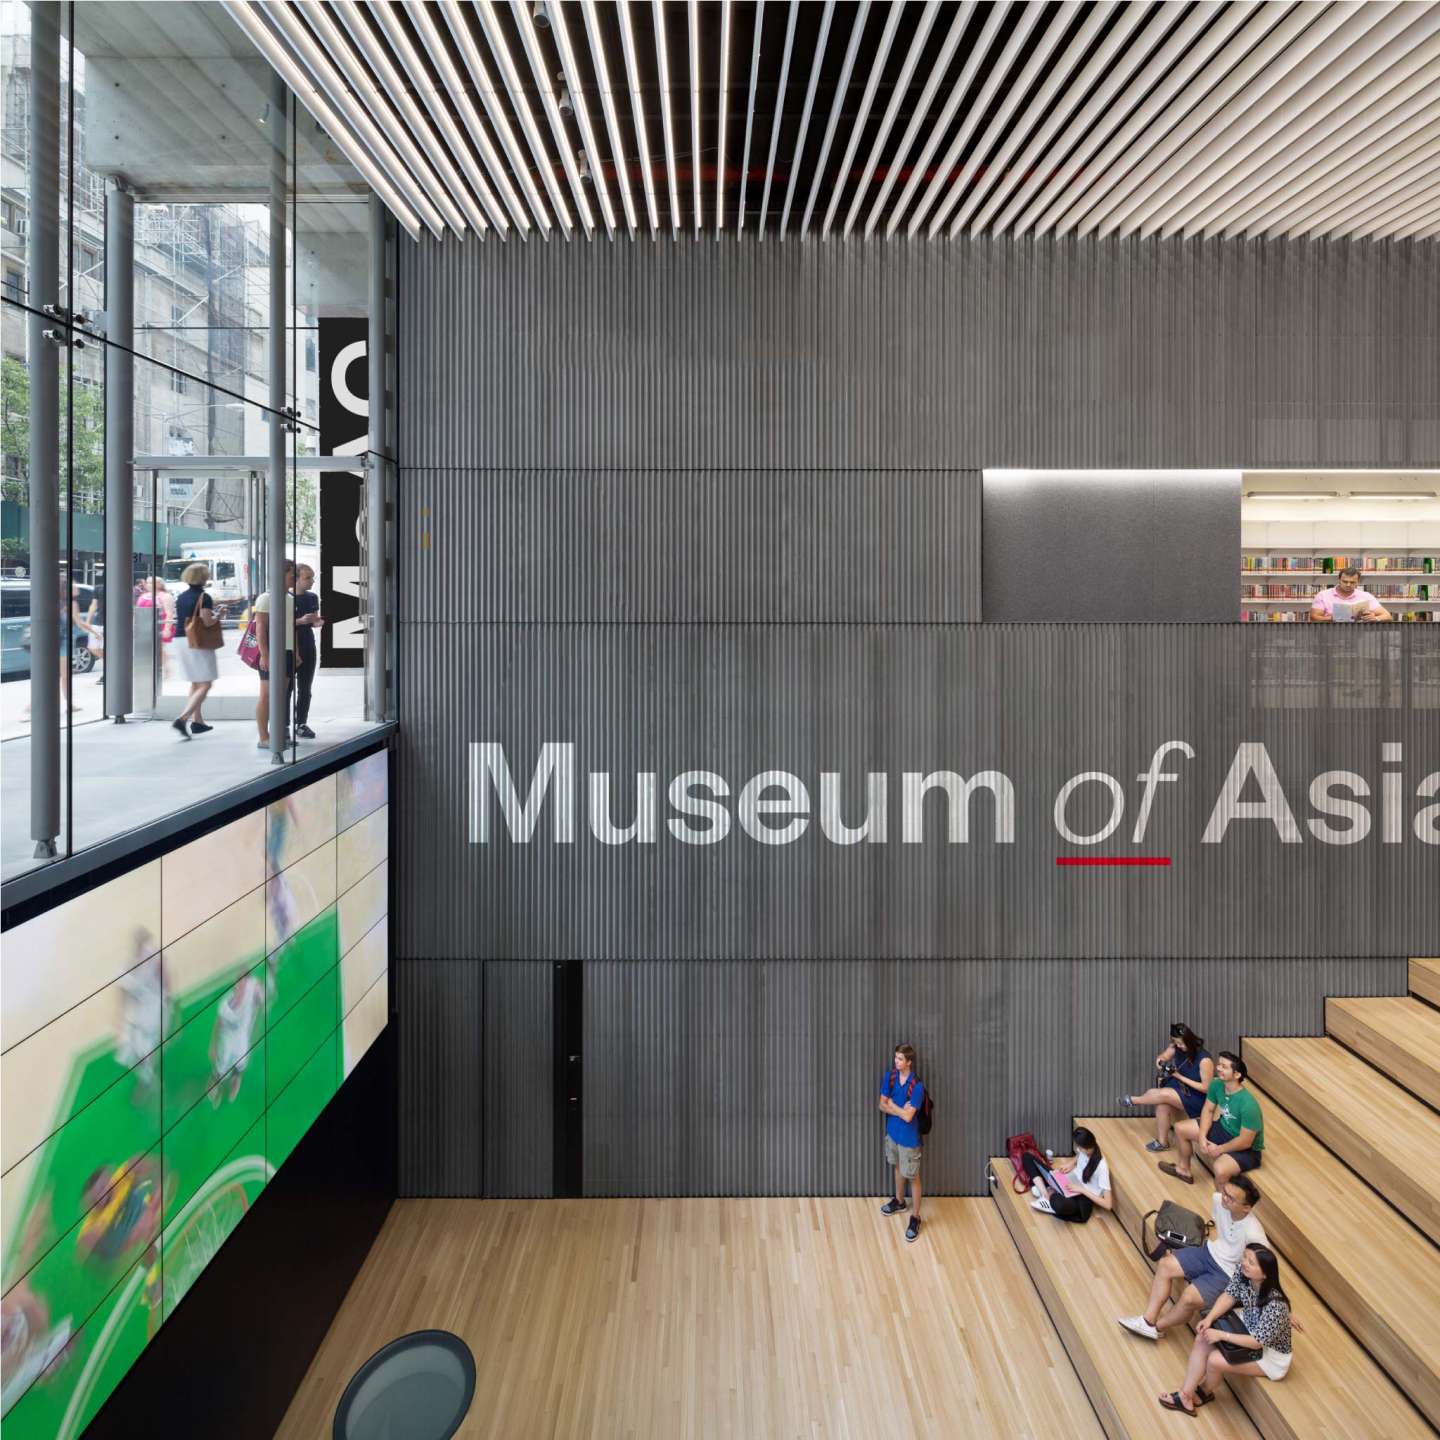 MUSEUM OF ASIAN CULTURE BRAND IDENTITY DESIGN